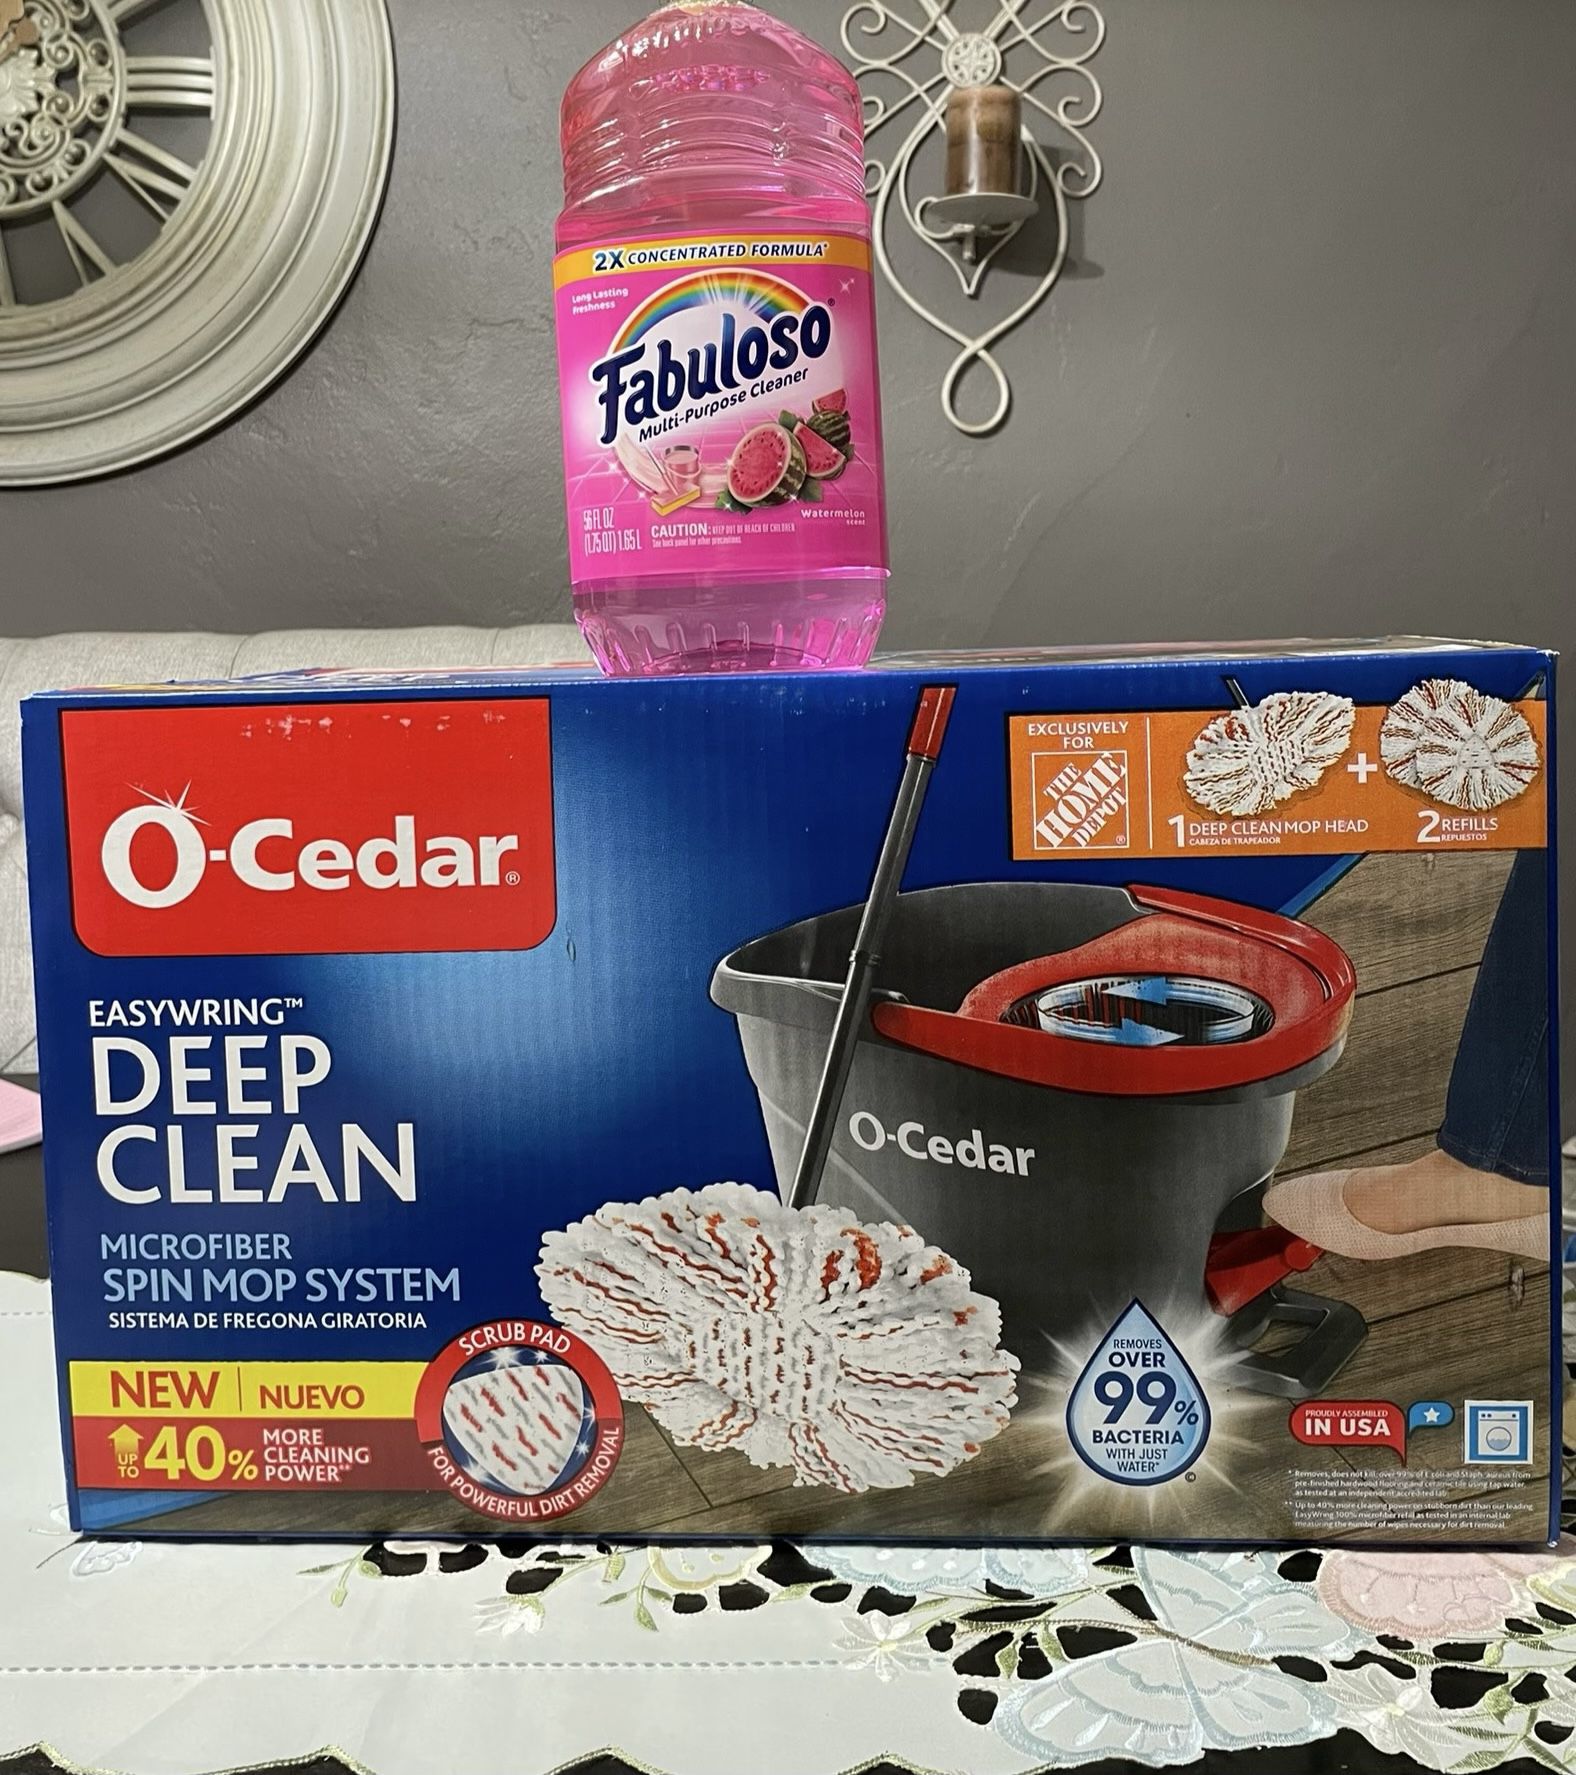 O-Cedar Deep Clean Spin Mop 